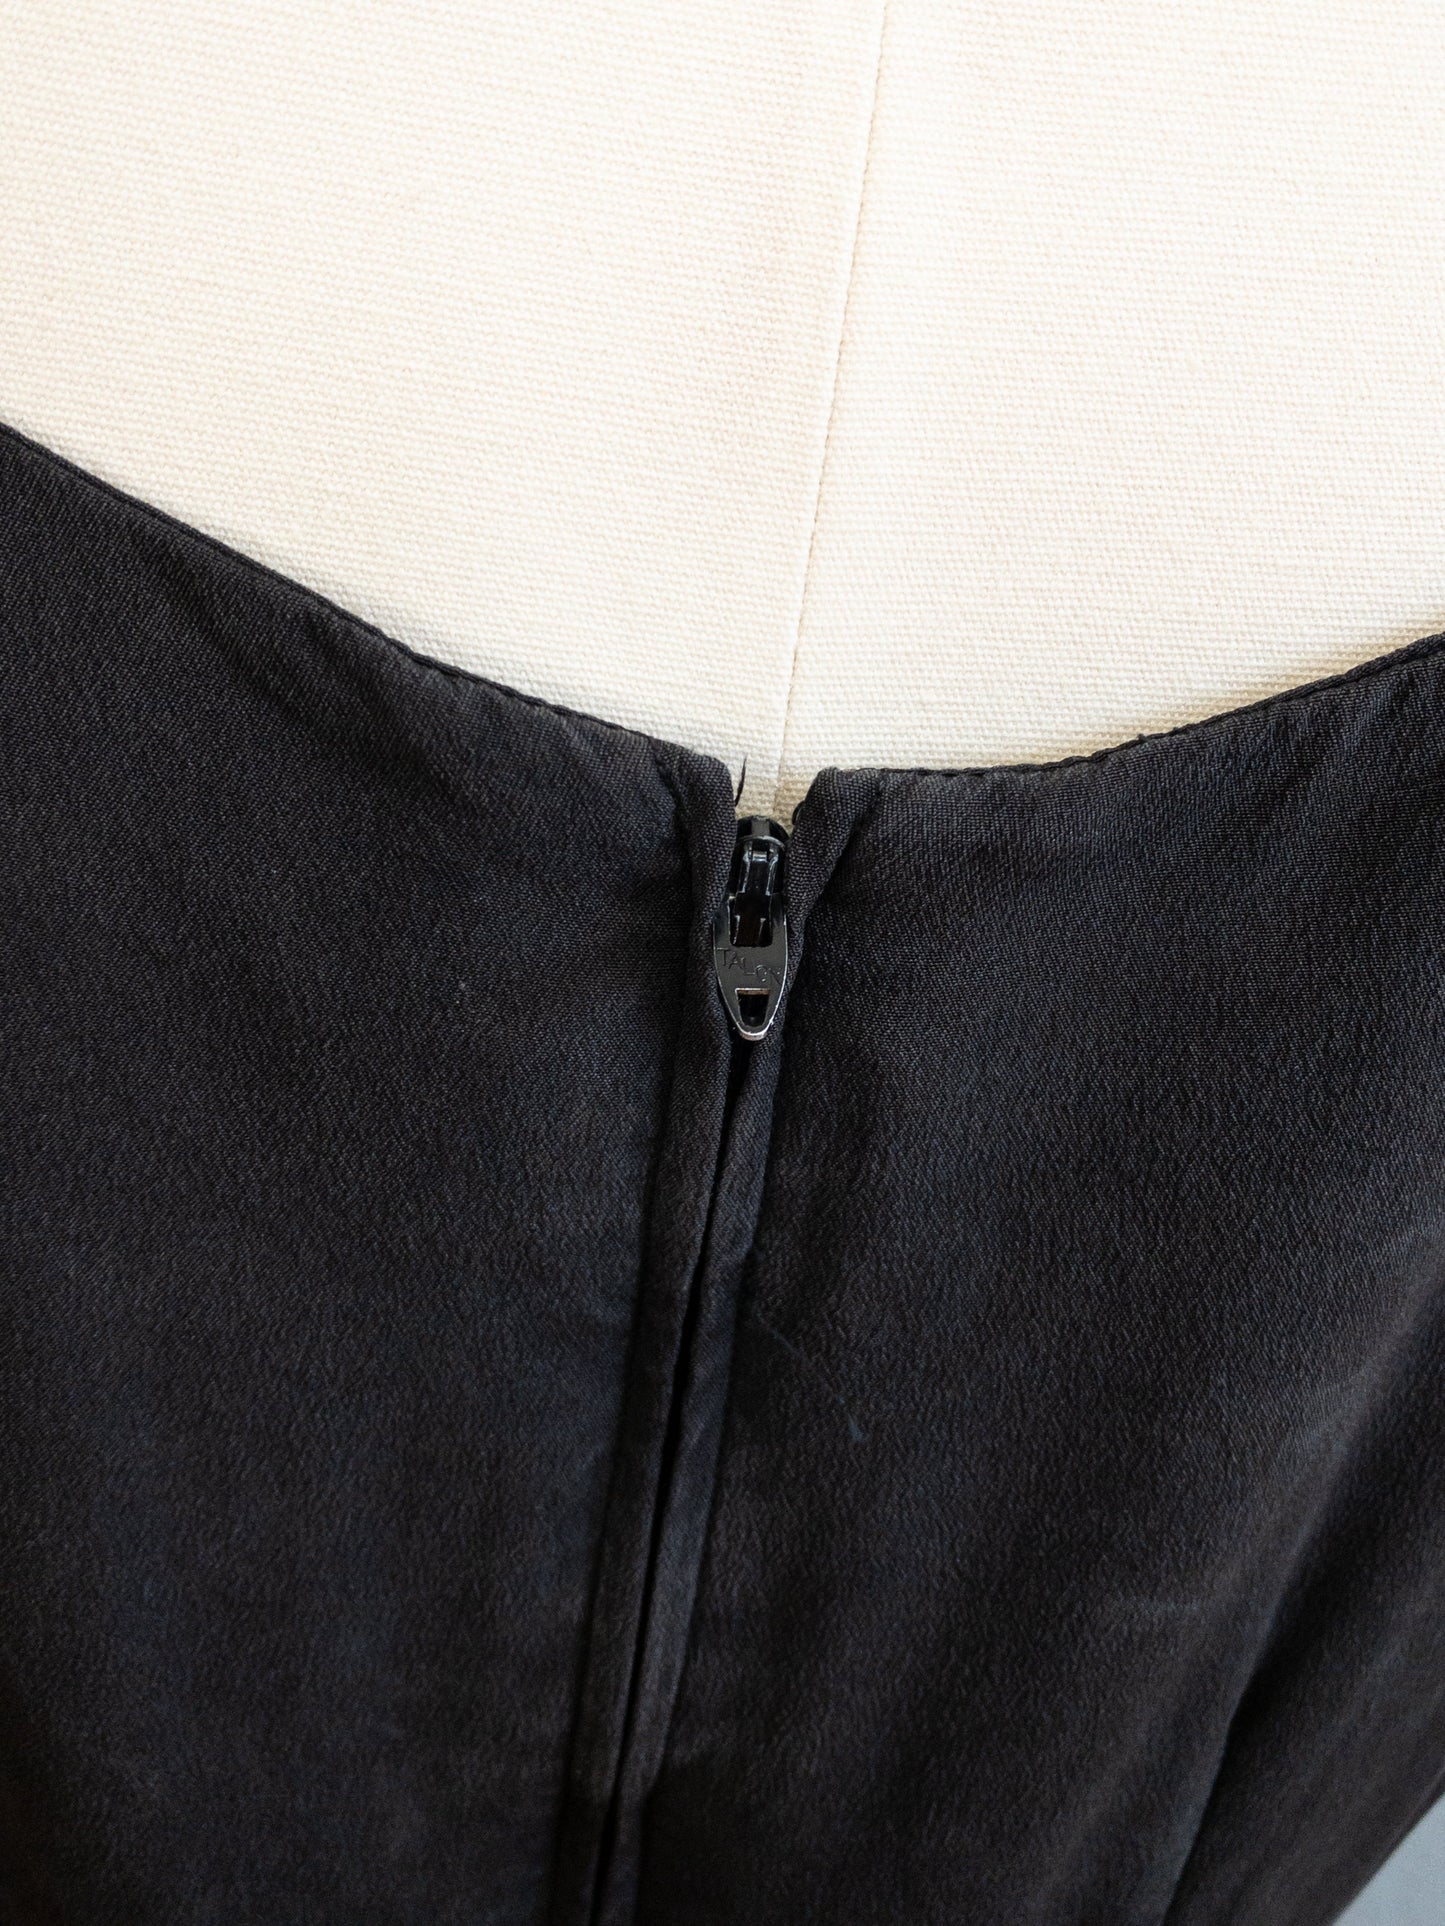 50's 60's Black Silky Wiggle Dress | S